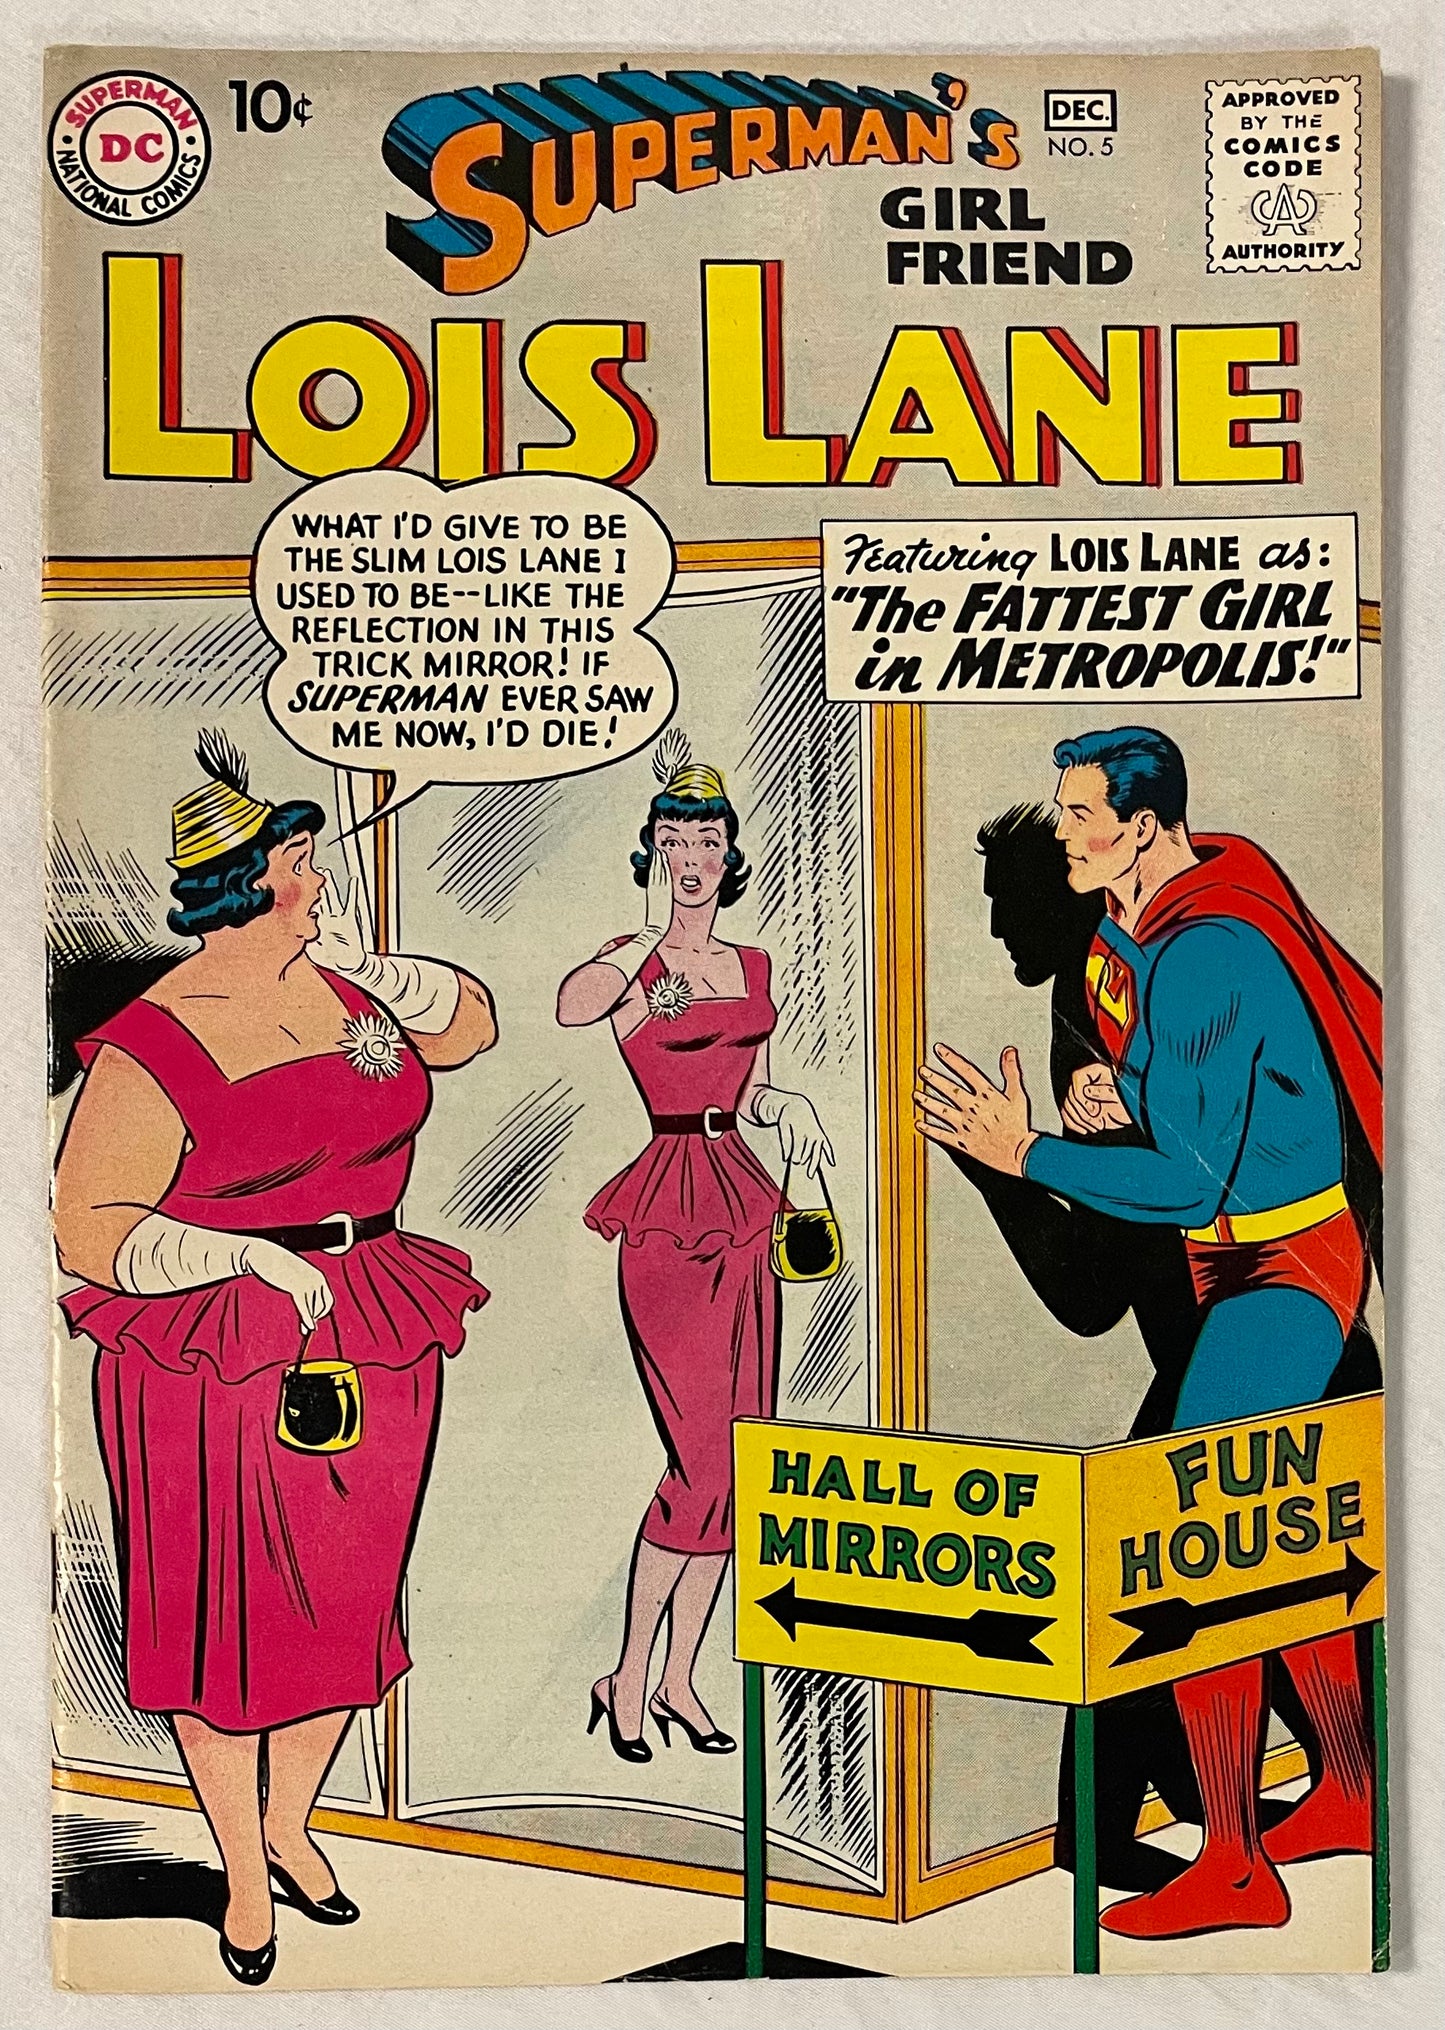 DC Comics Superman's Girl Friend Lois Lane No. 5